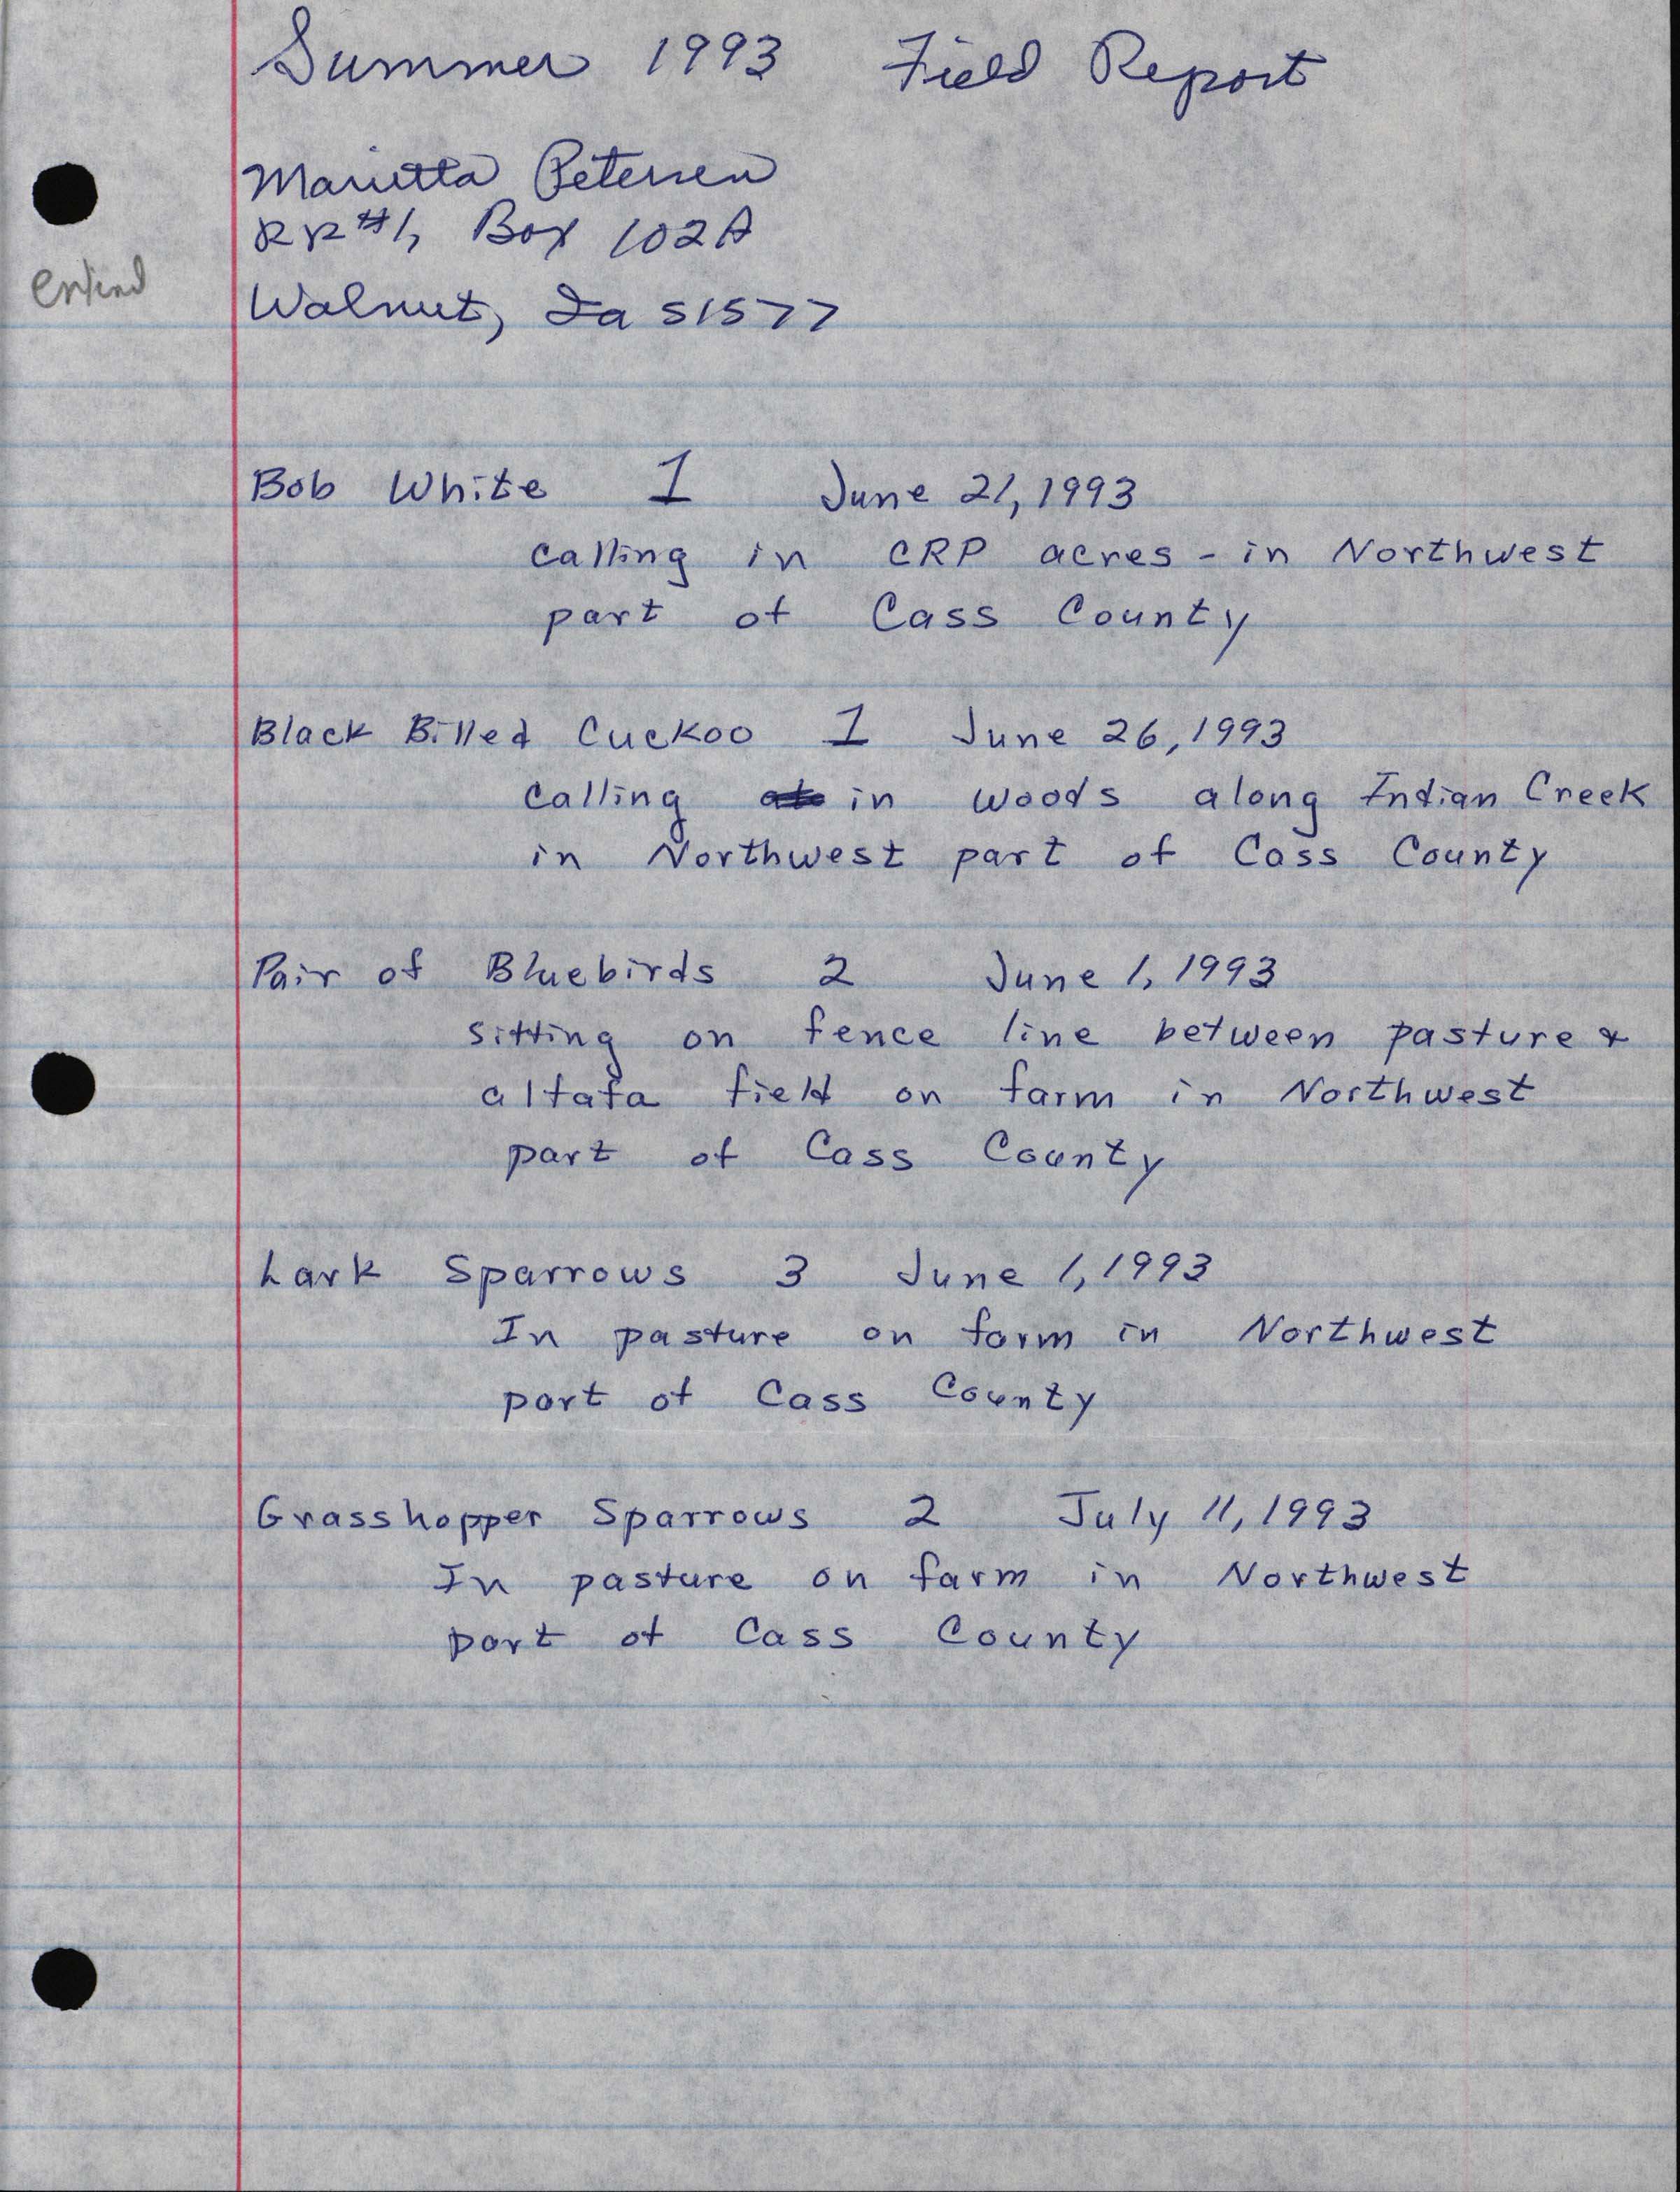 Field notes contributed by Marietta Petersen, summer 1993